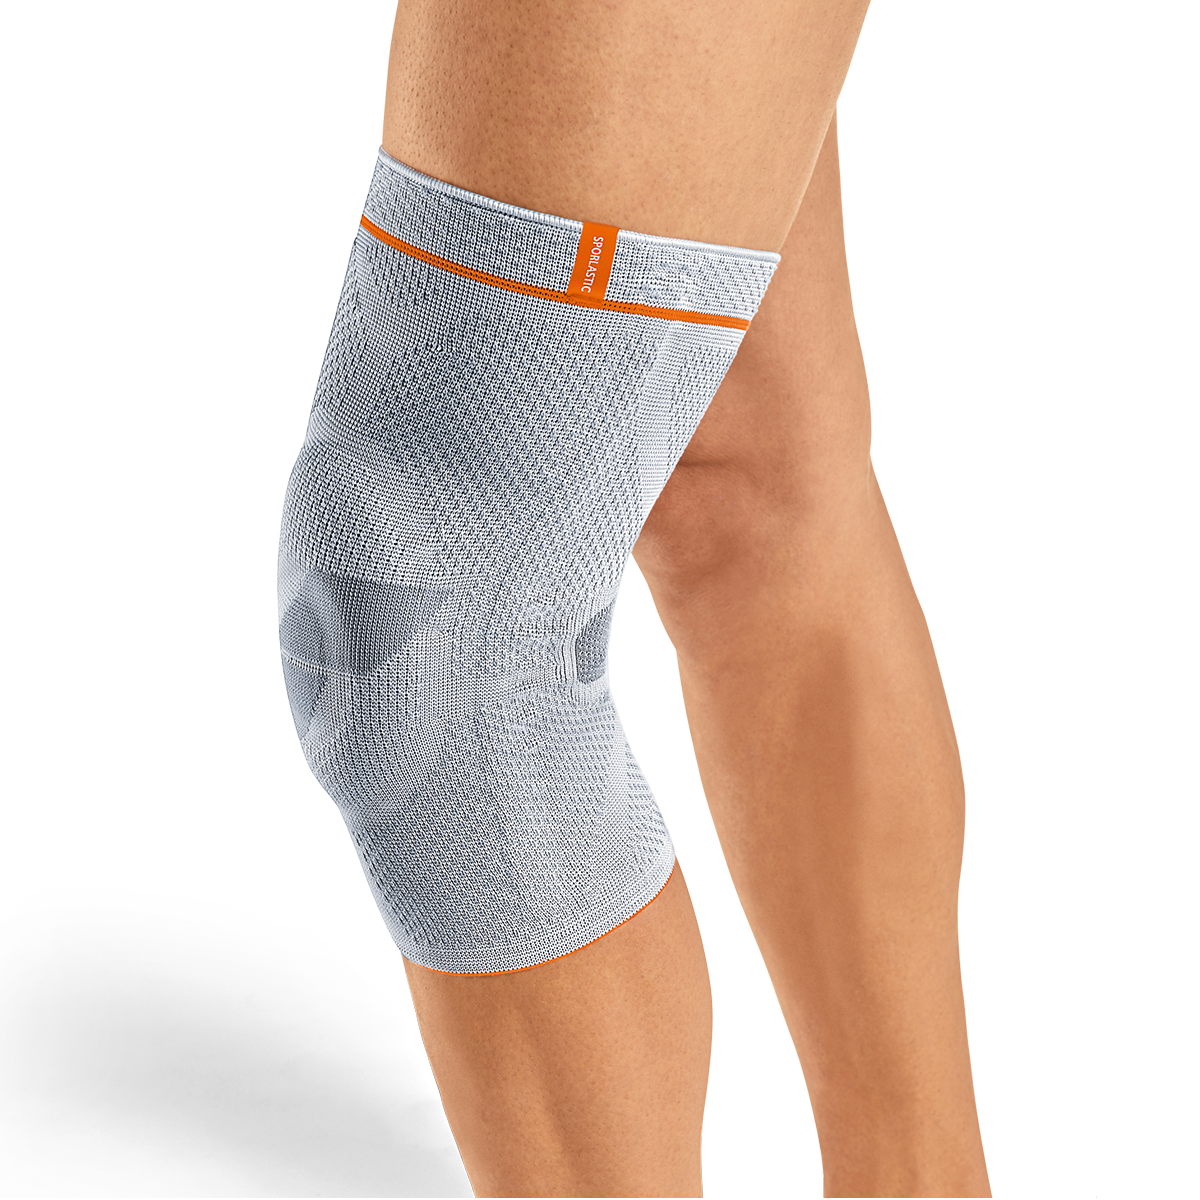 GENU-HiT ® RS Knee Braces - physio supplies canada